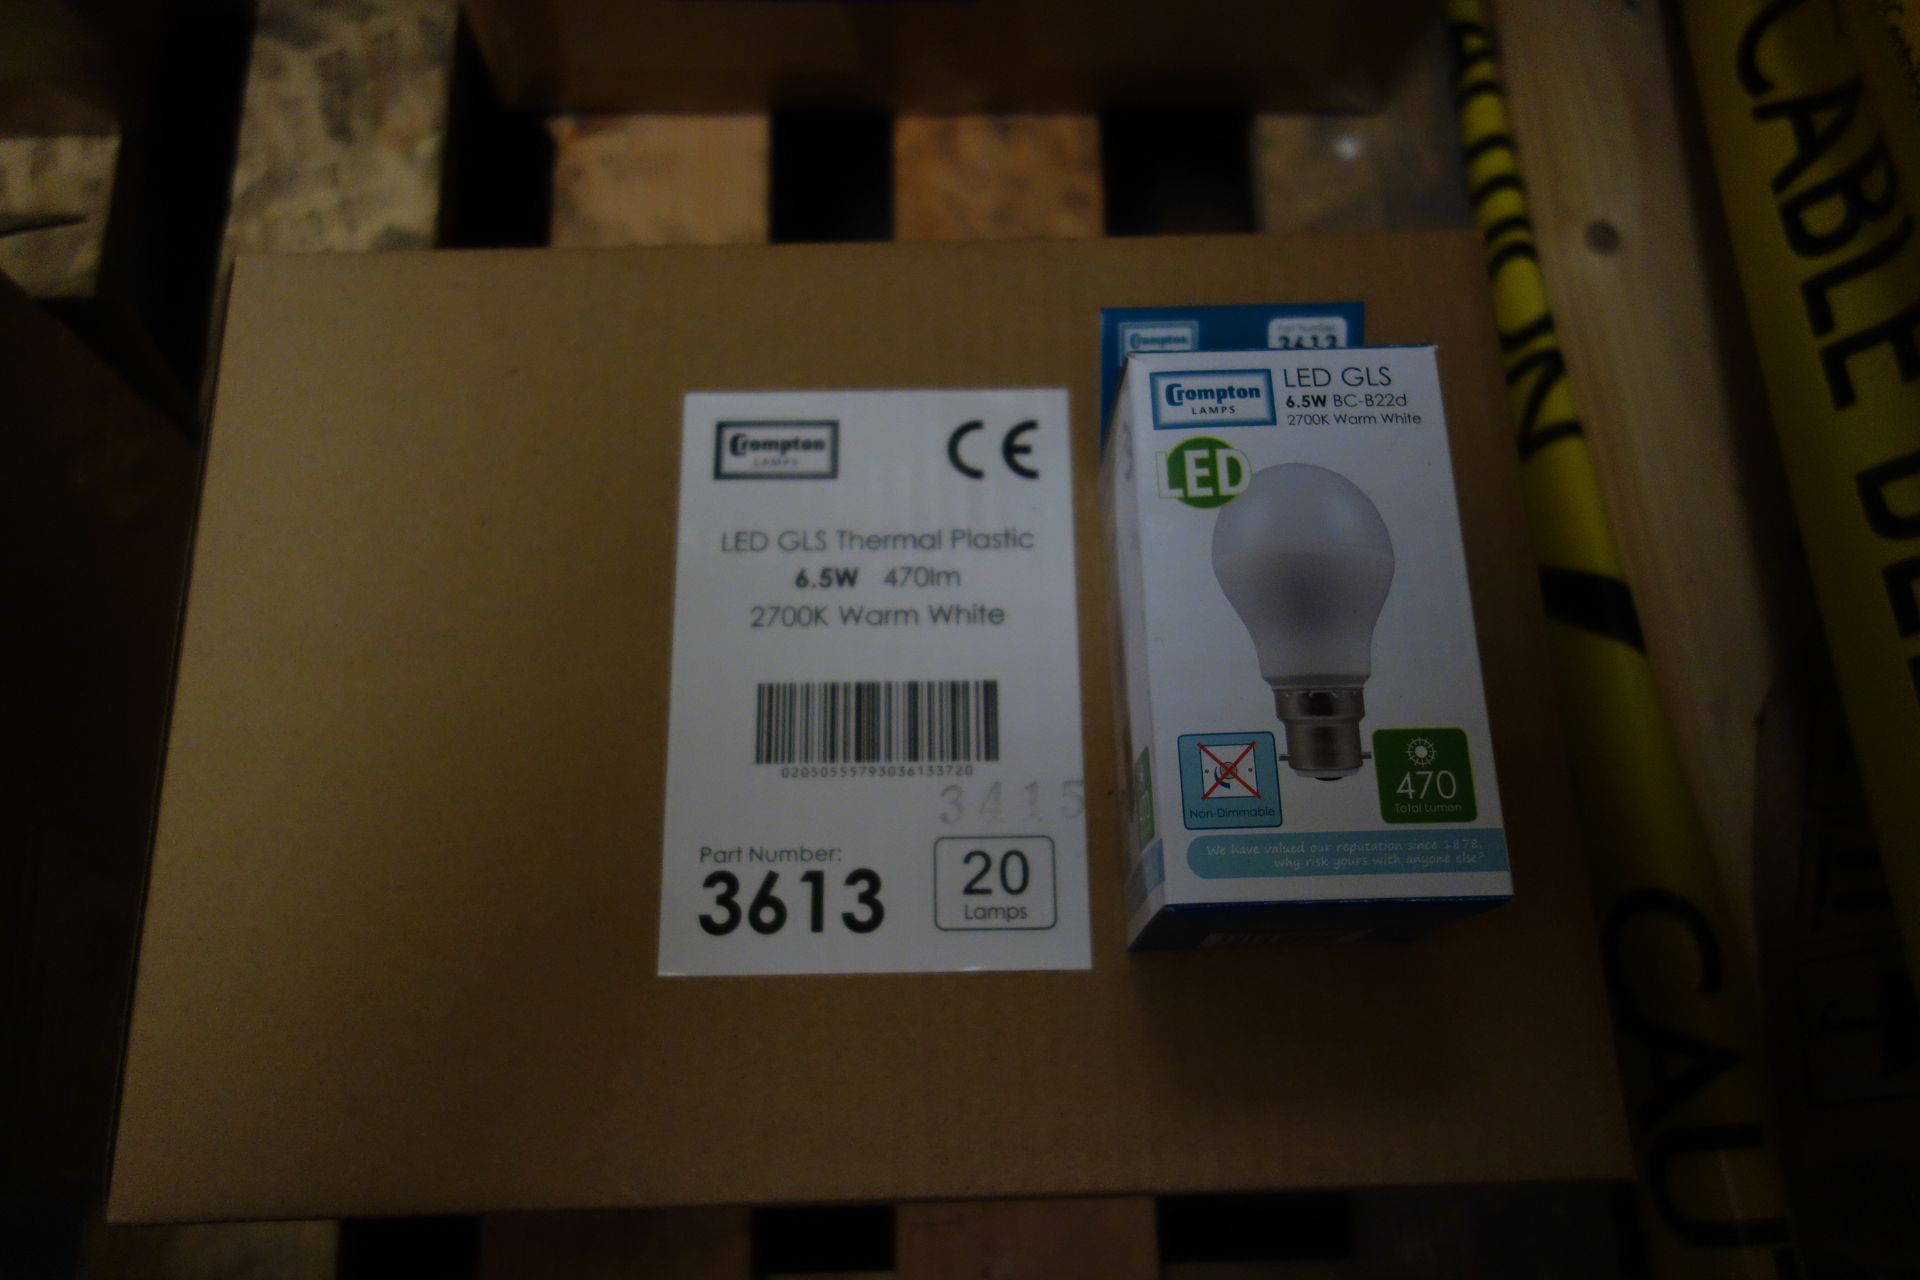 100 X Crompton 3613 LED GLS Thermal Plastic 6.5 W 470 Lumen 2700K Warm White